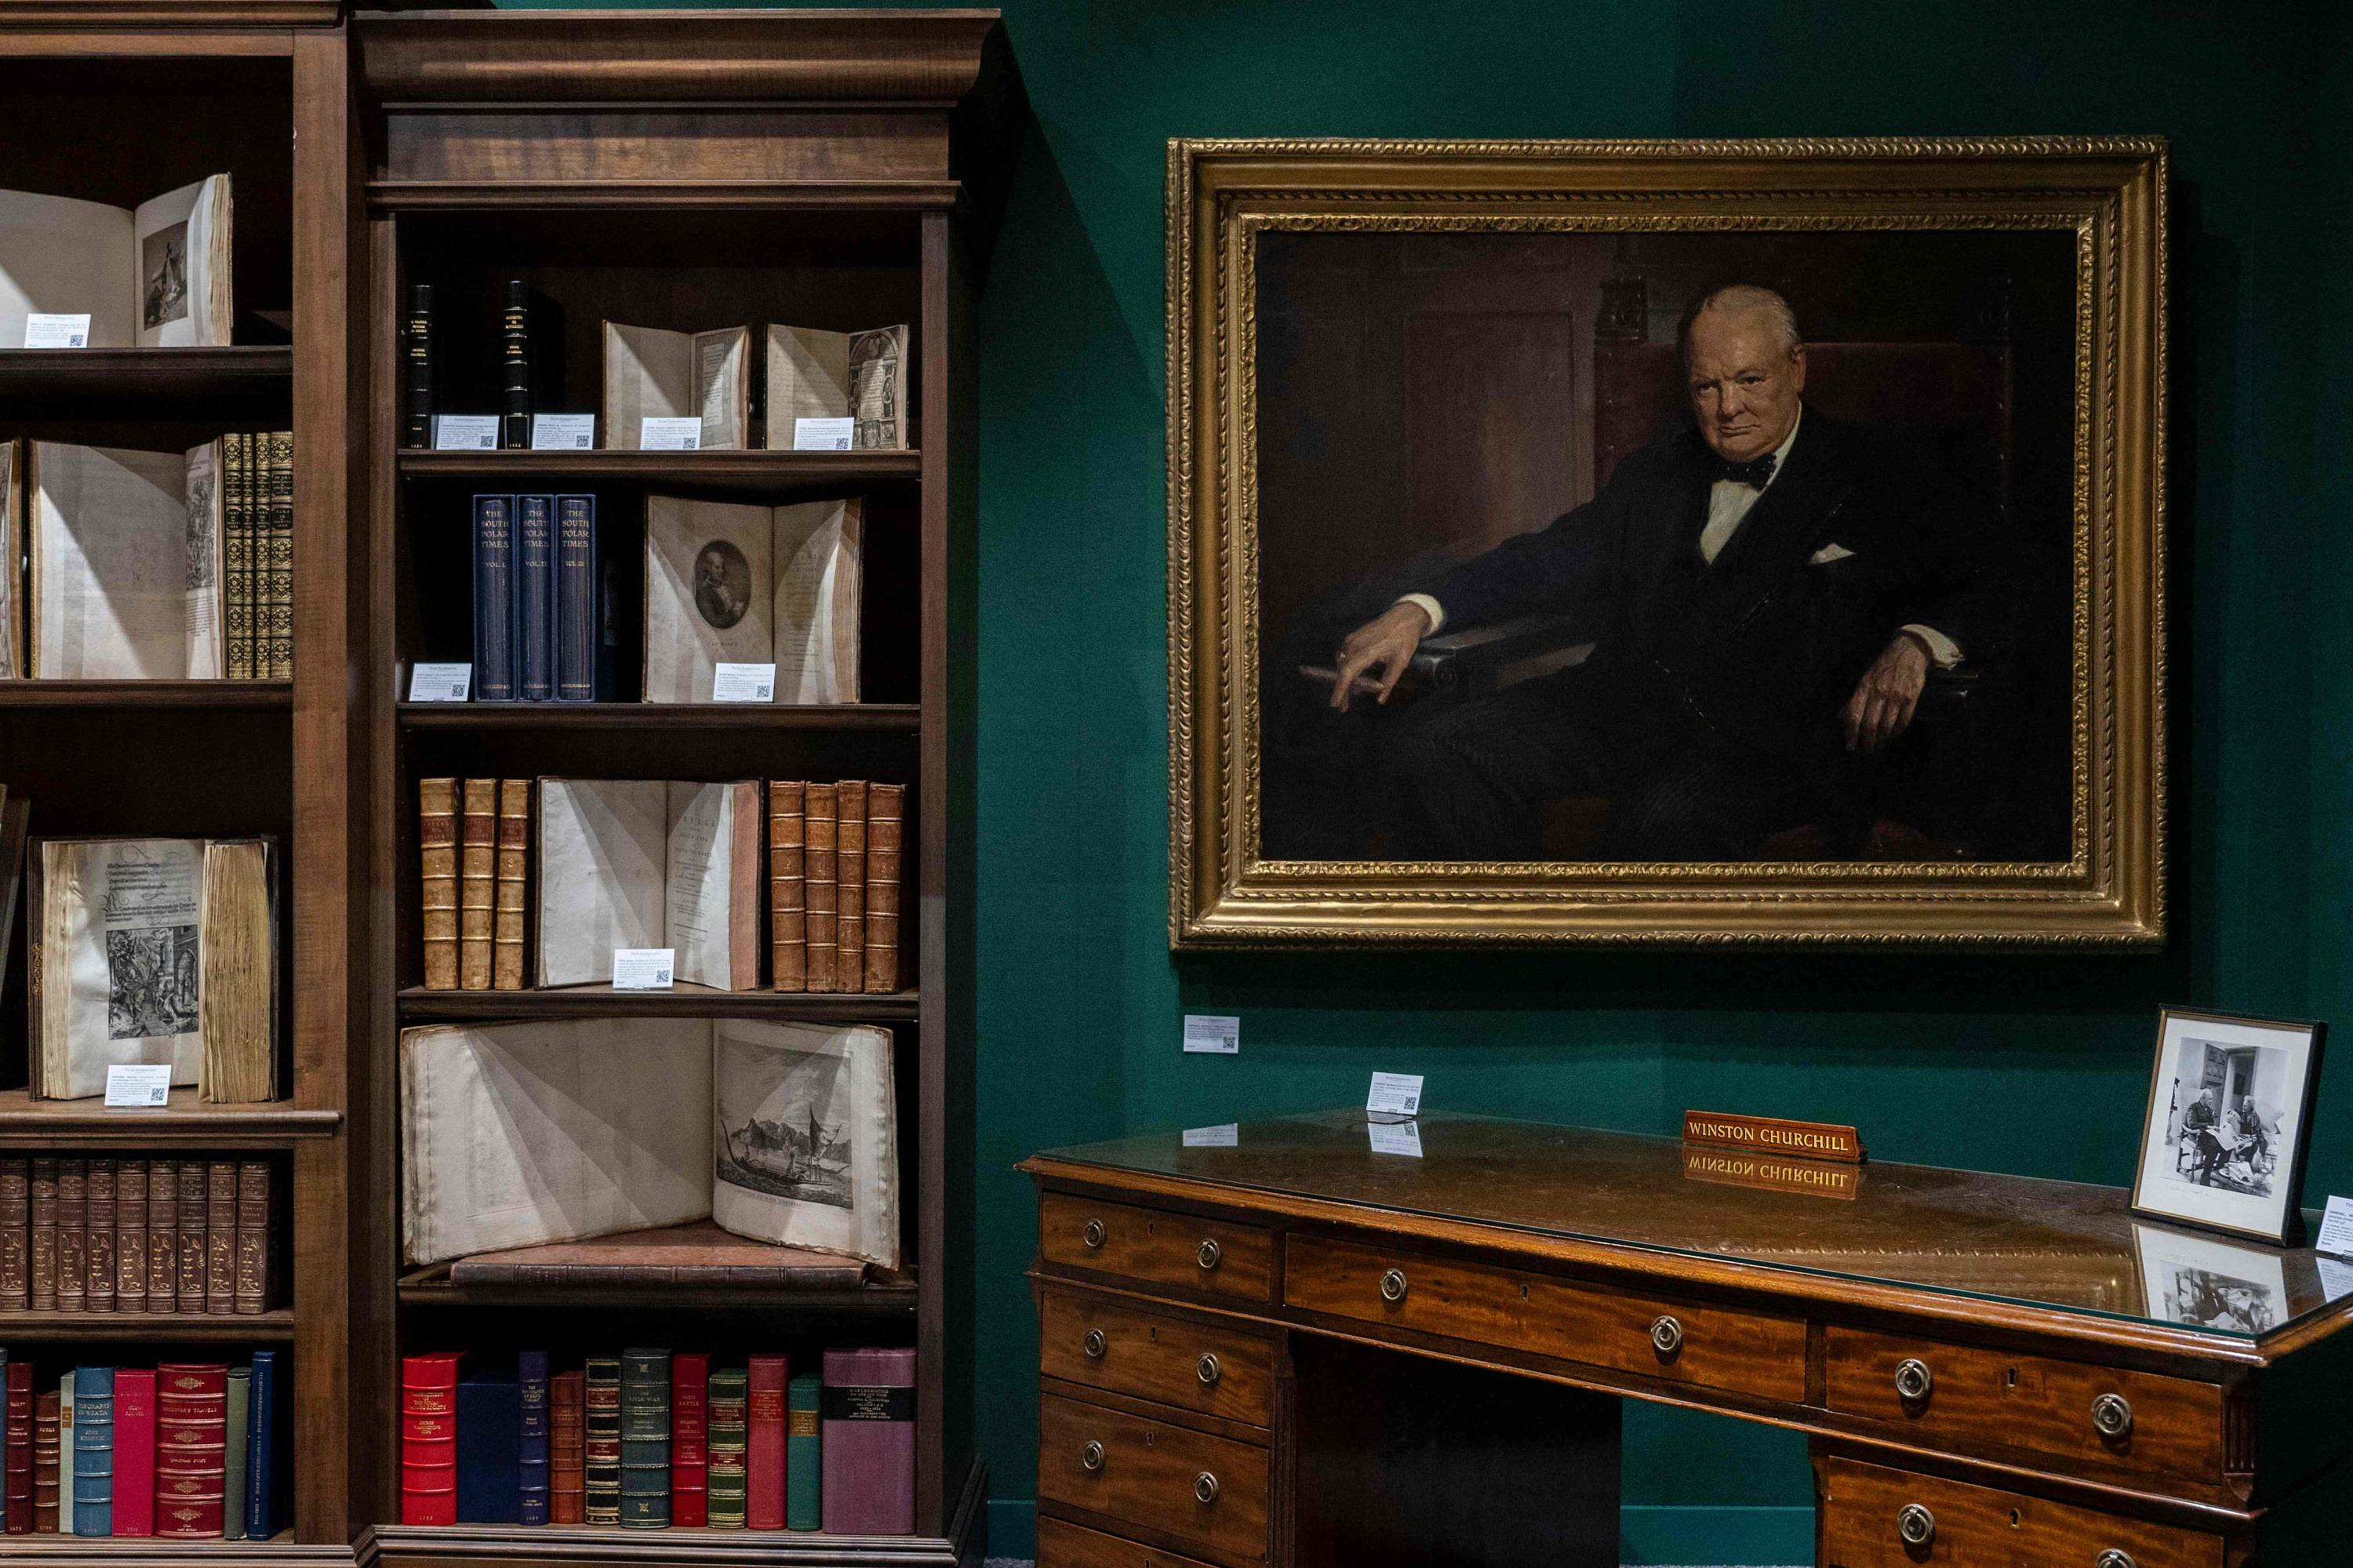 Winston Churchill, painter and writer, in the spotlight in New York